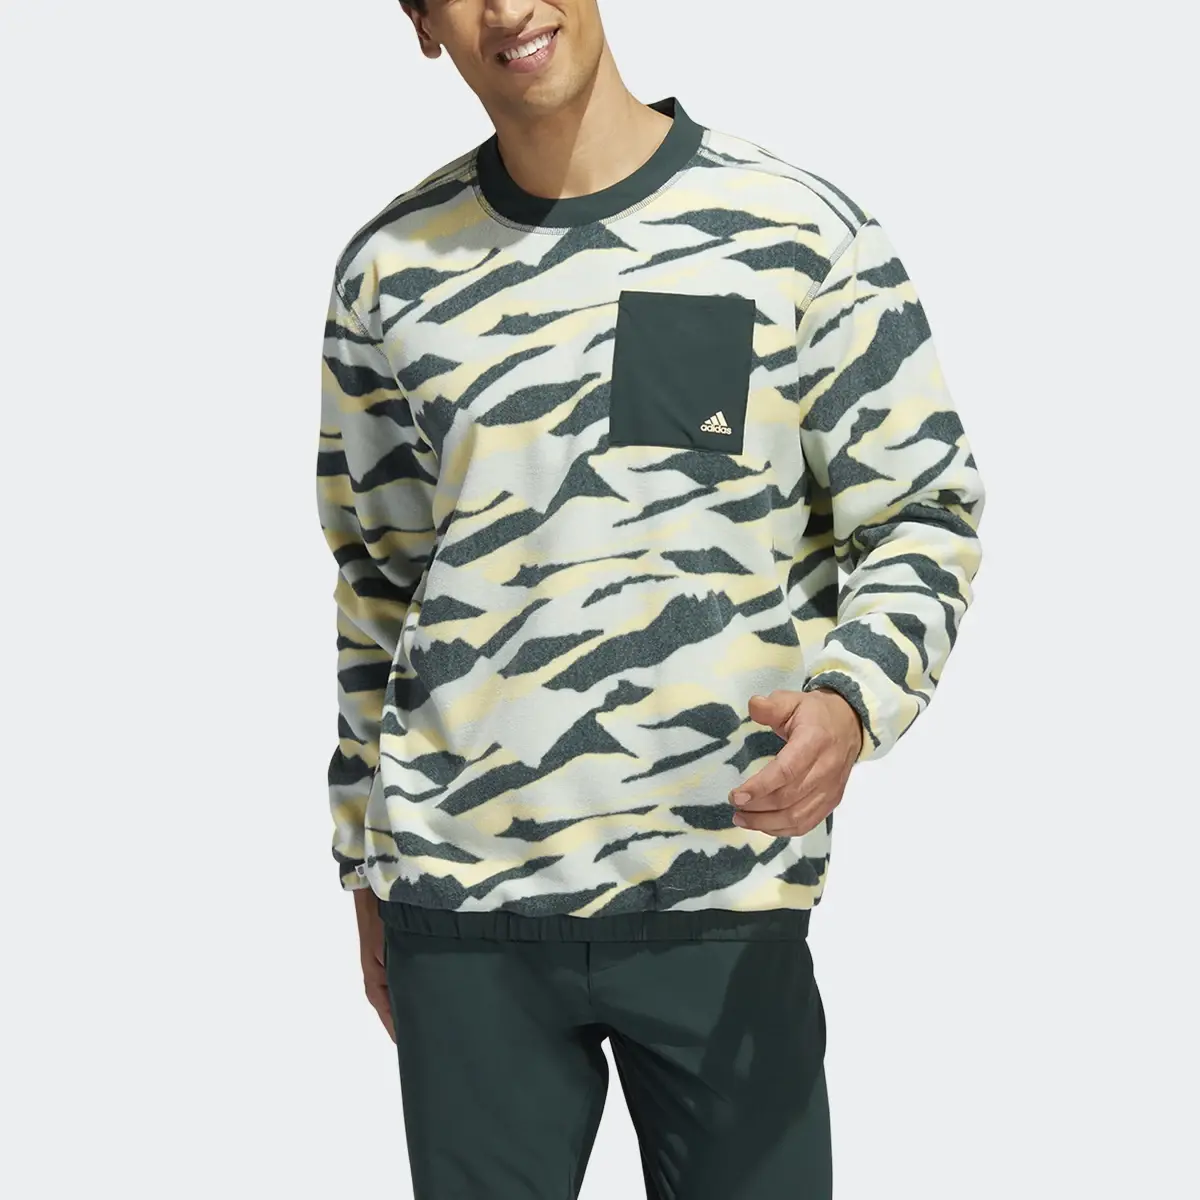 Adidas Texture-Print Sweatshirt. 1